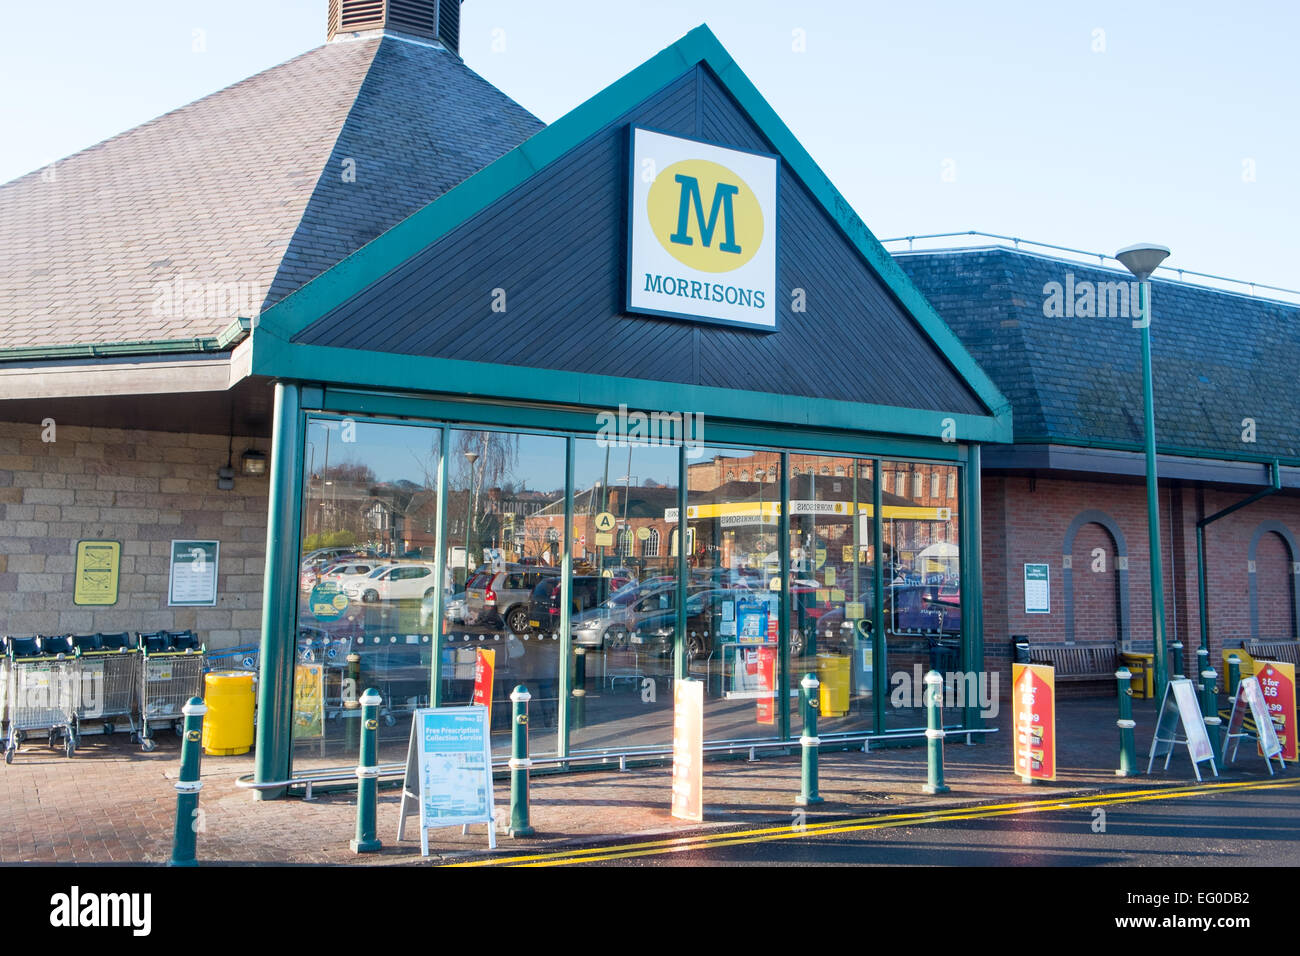 Catena di supermercati inglese Morrisons, qui un negozio a Belper, Derbyshire, Inghilterra, 2015 Foto Stock